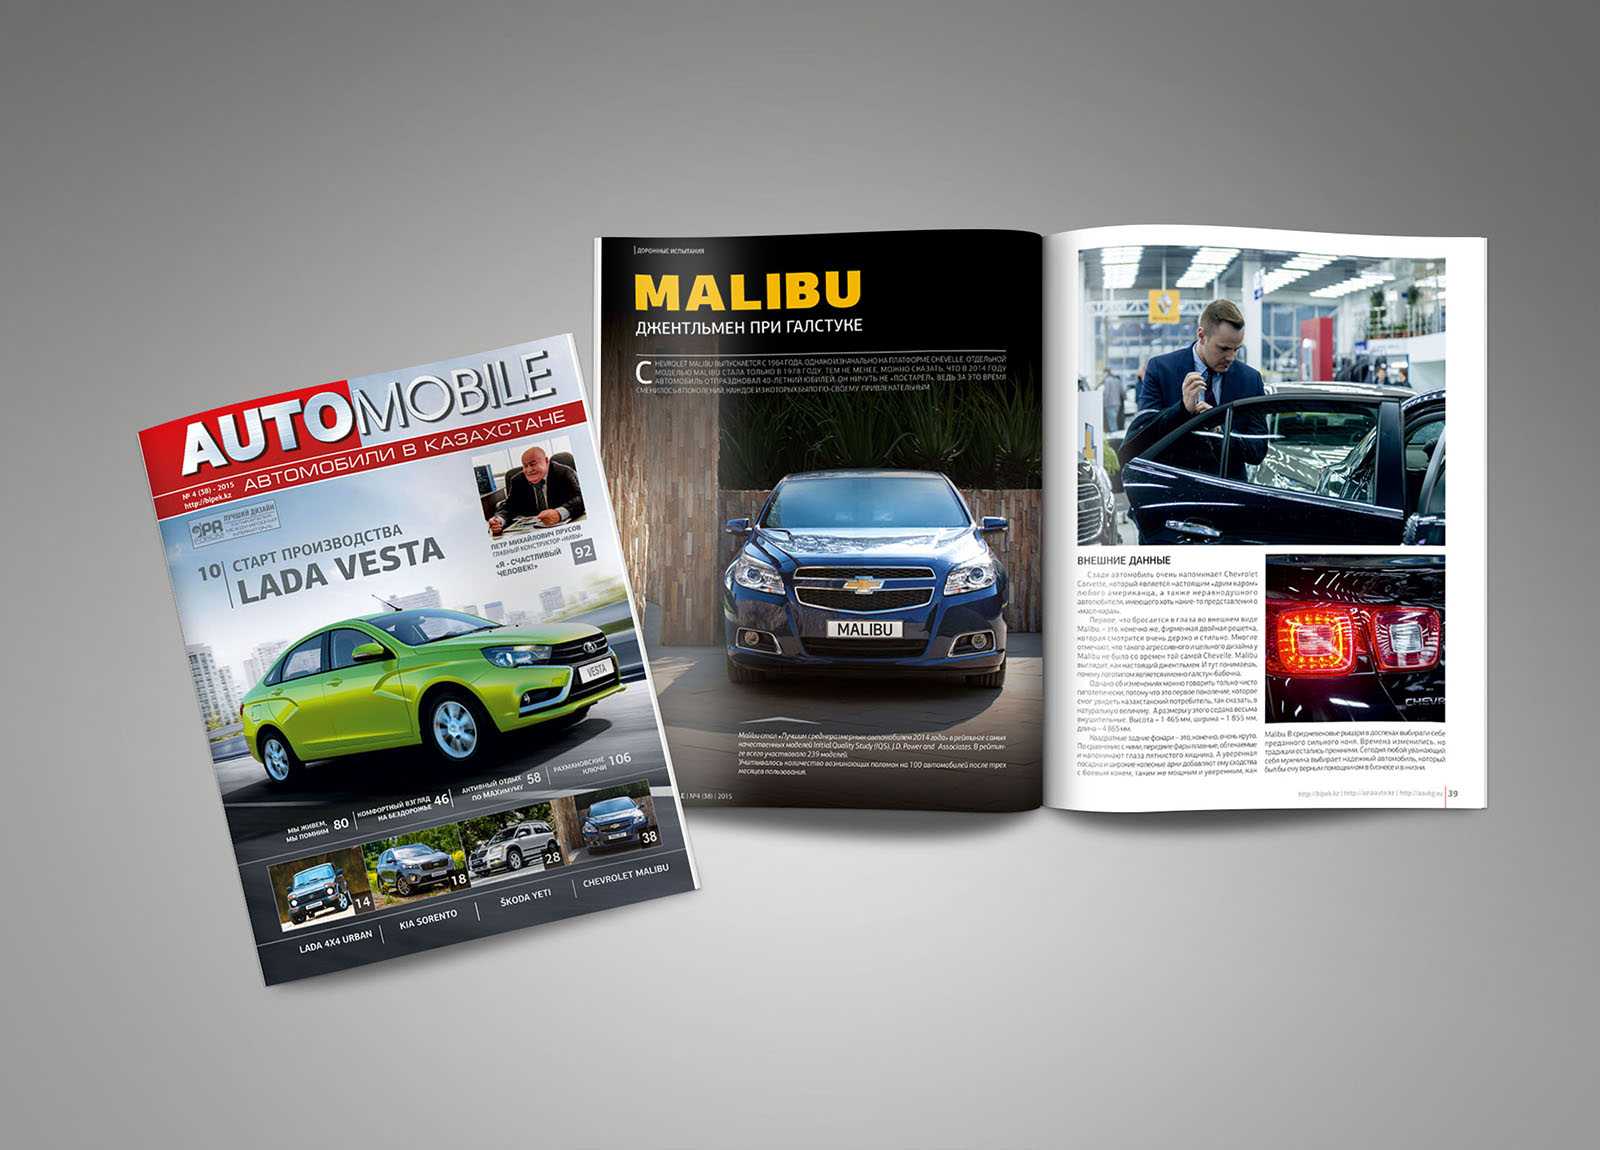 Car magazine. Автомобильные журналы. The Automobile журнал. Реклама автомобилей в журналах. Журнал про автомобили для мальчиков.